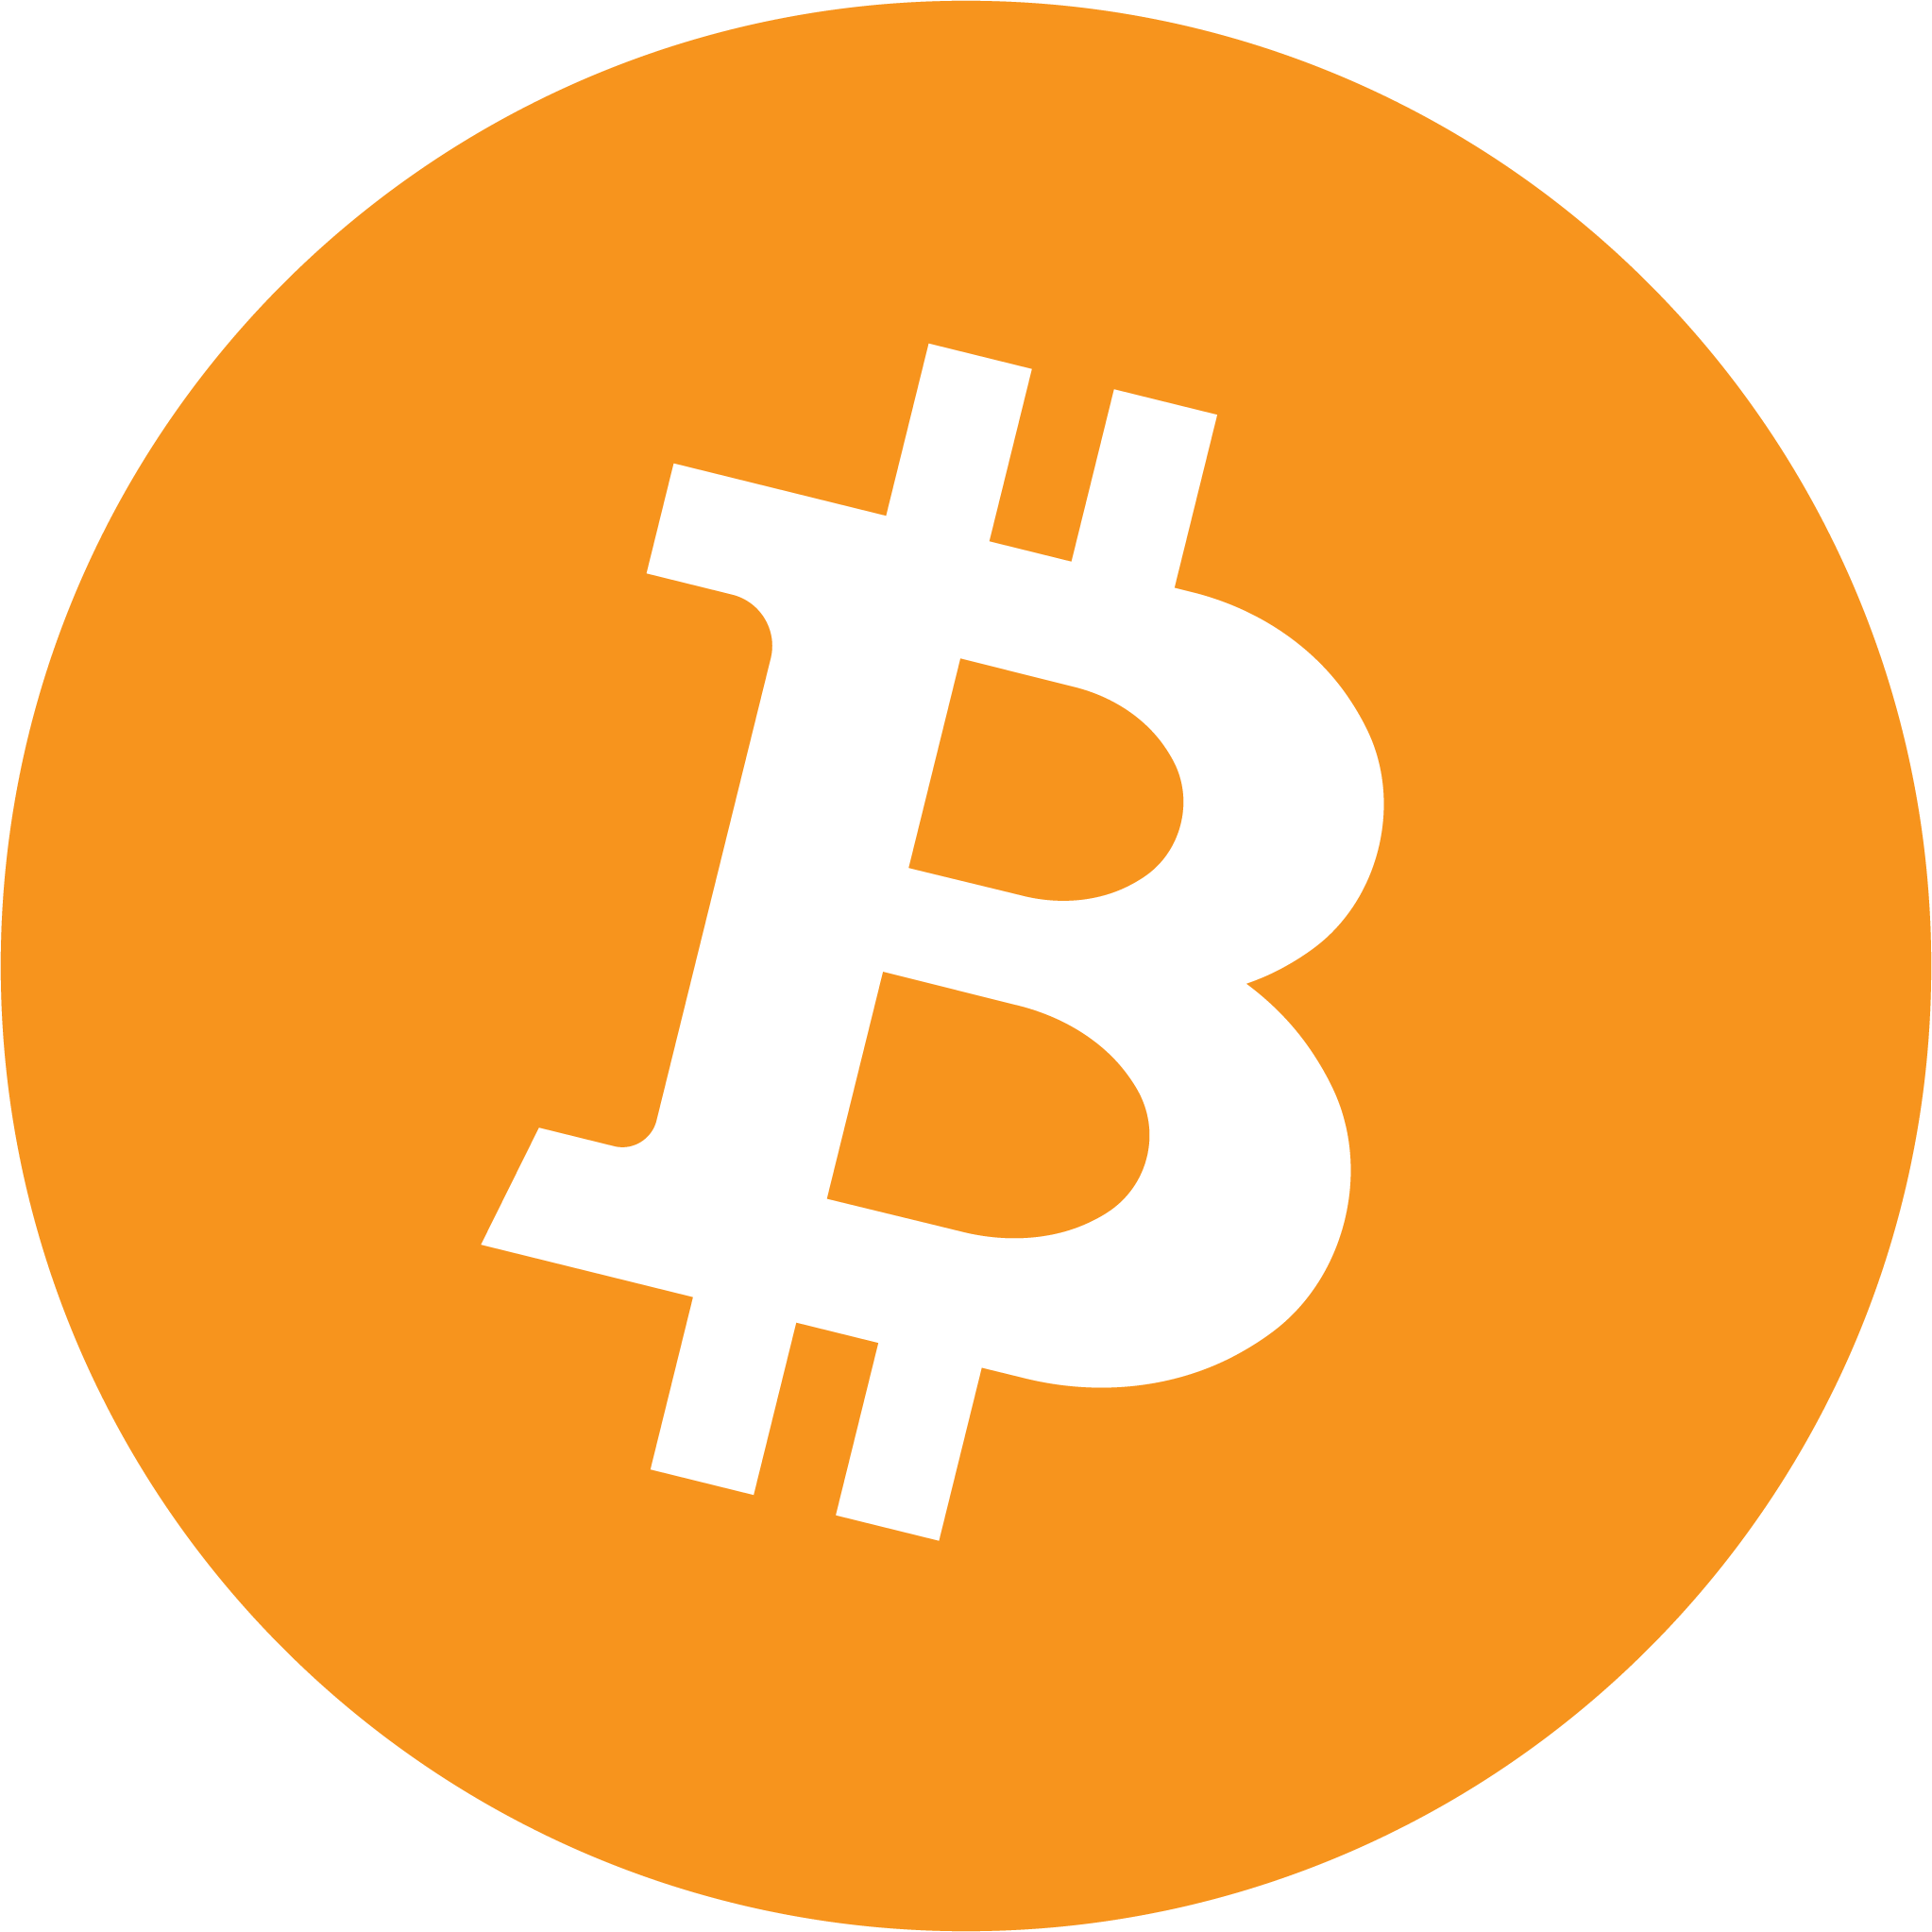 Orange Circle Logo - Bitcoin Symbol and Logo Origins